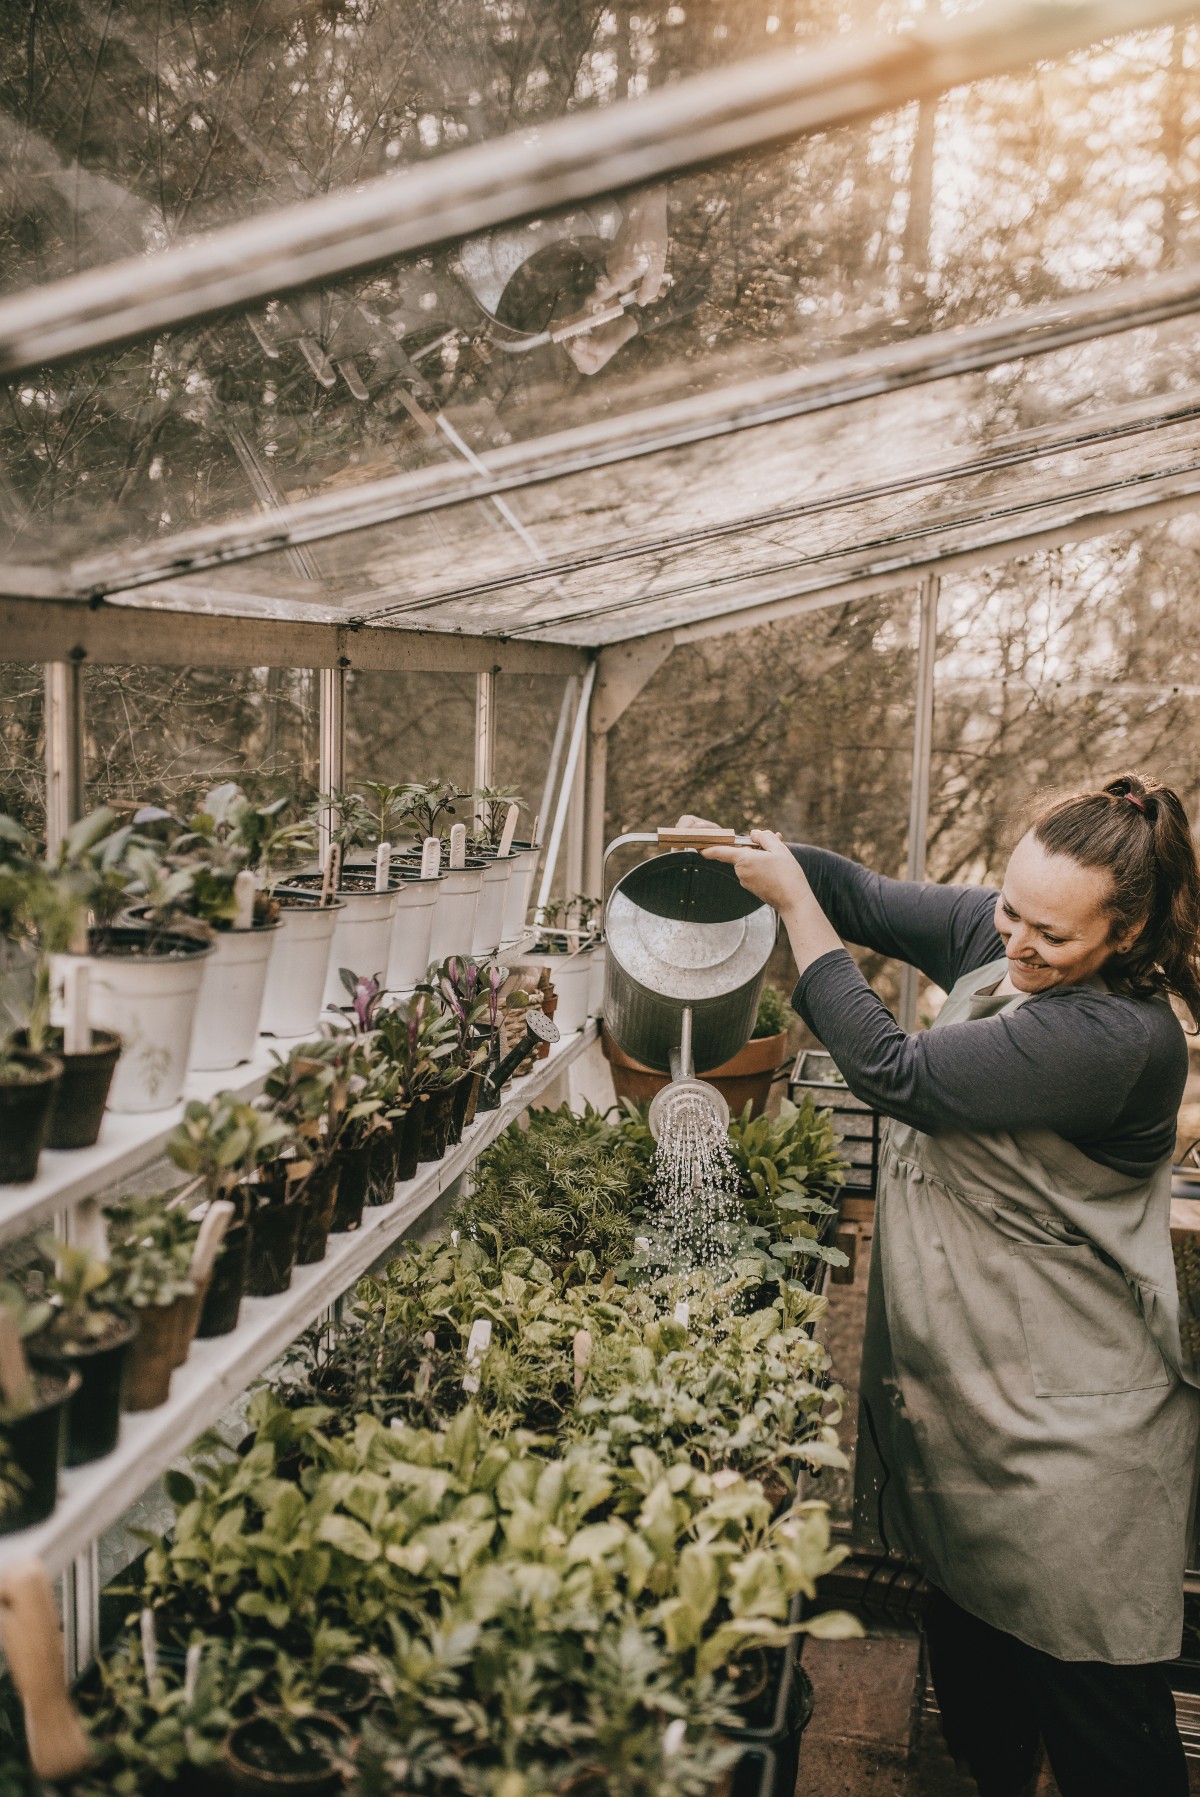 herbalist watering plants in a greenhouse